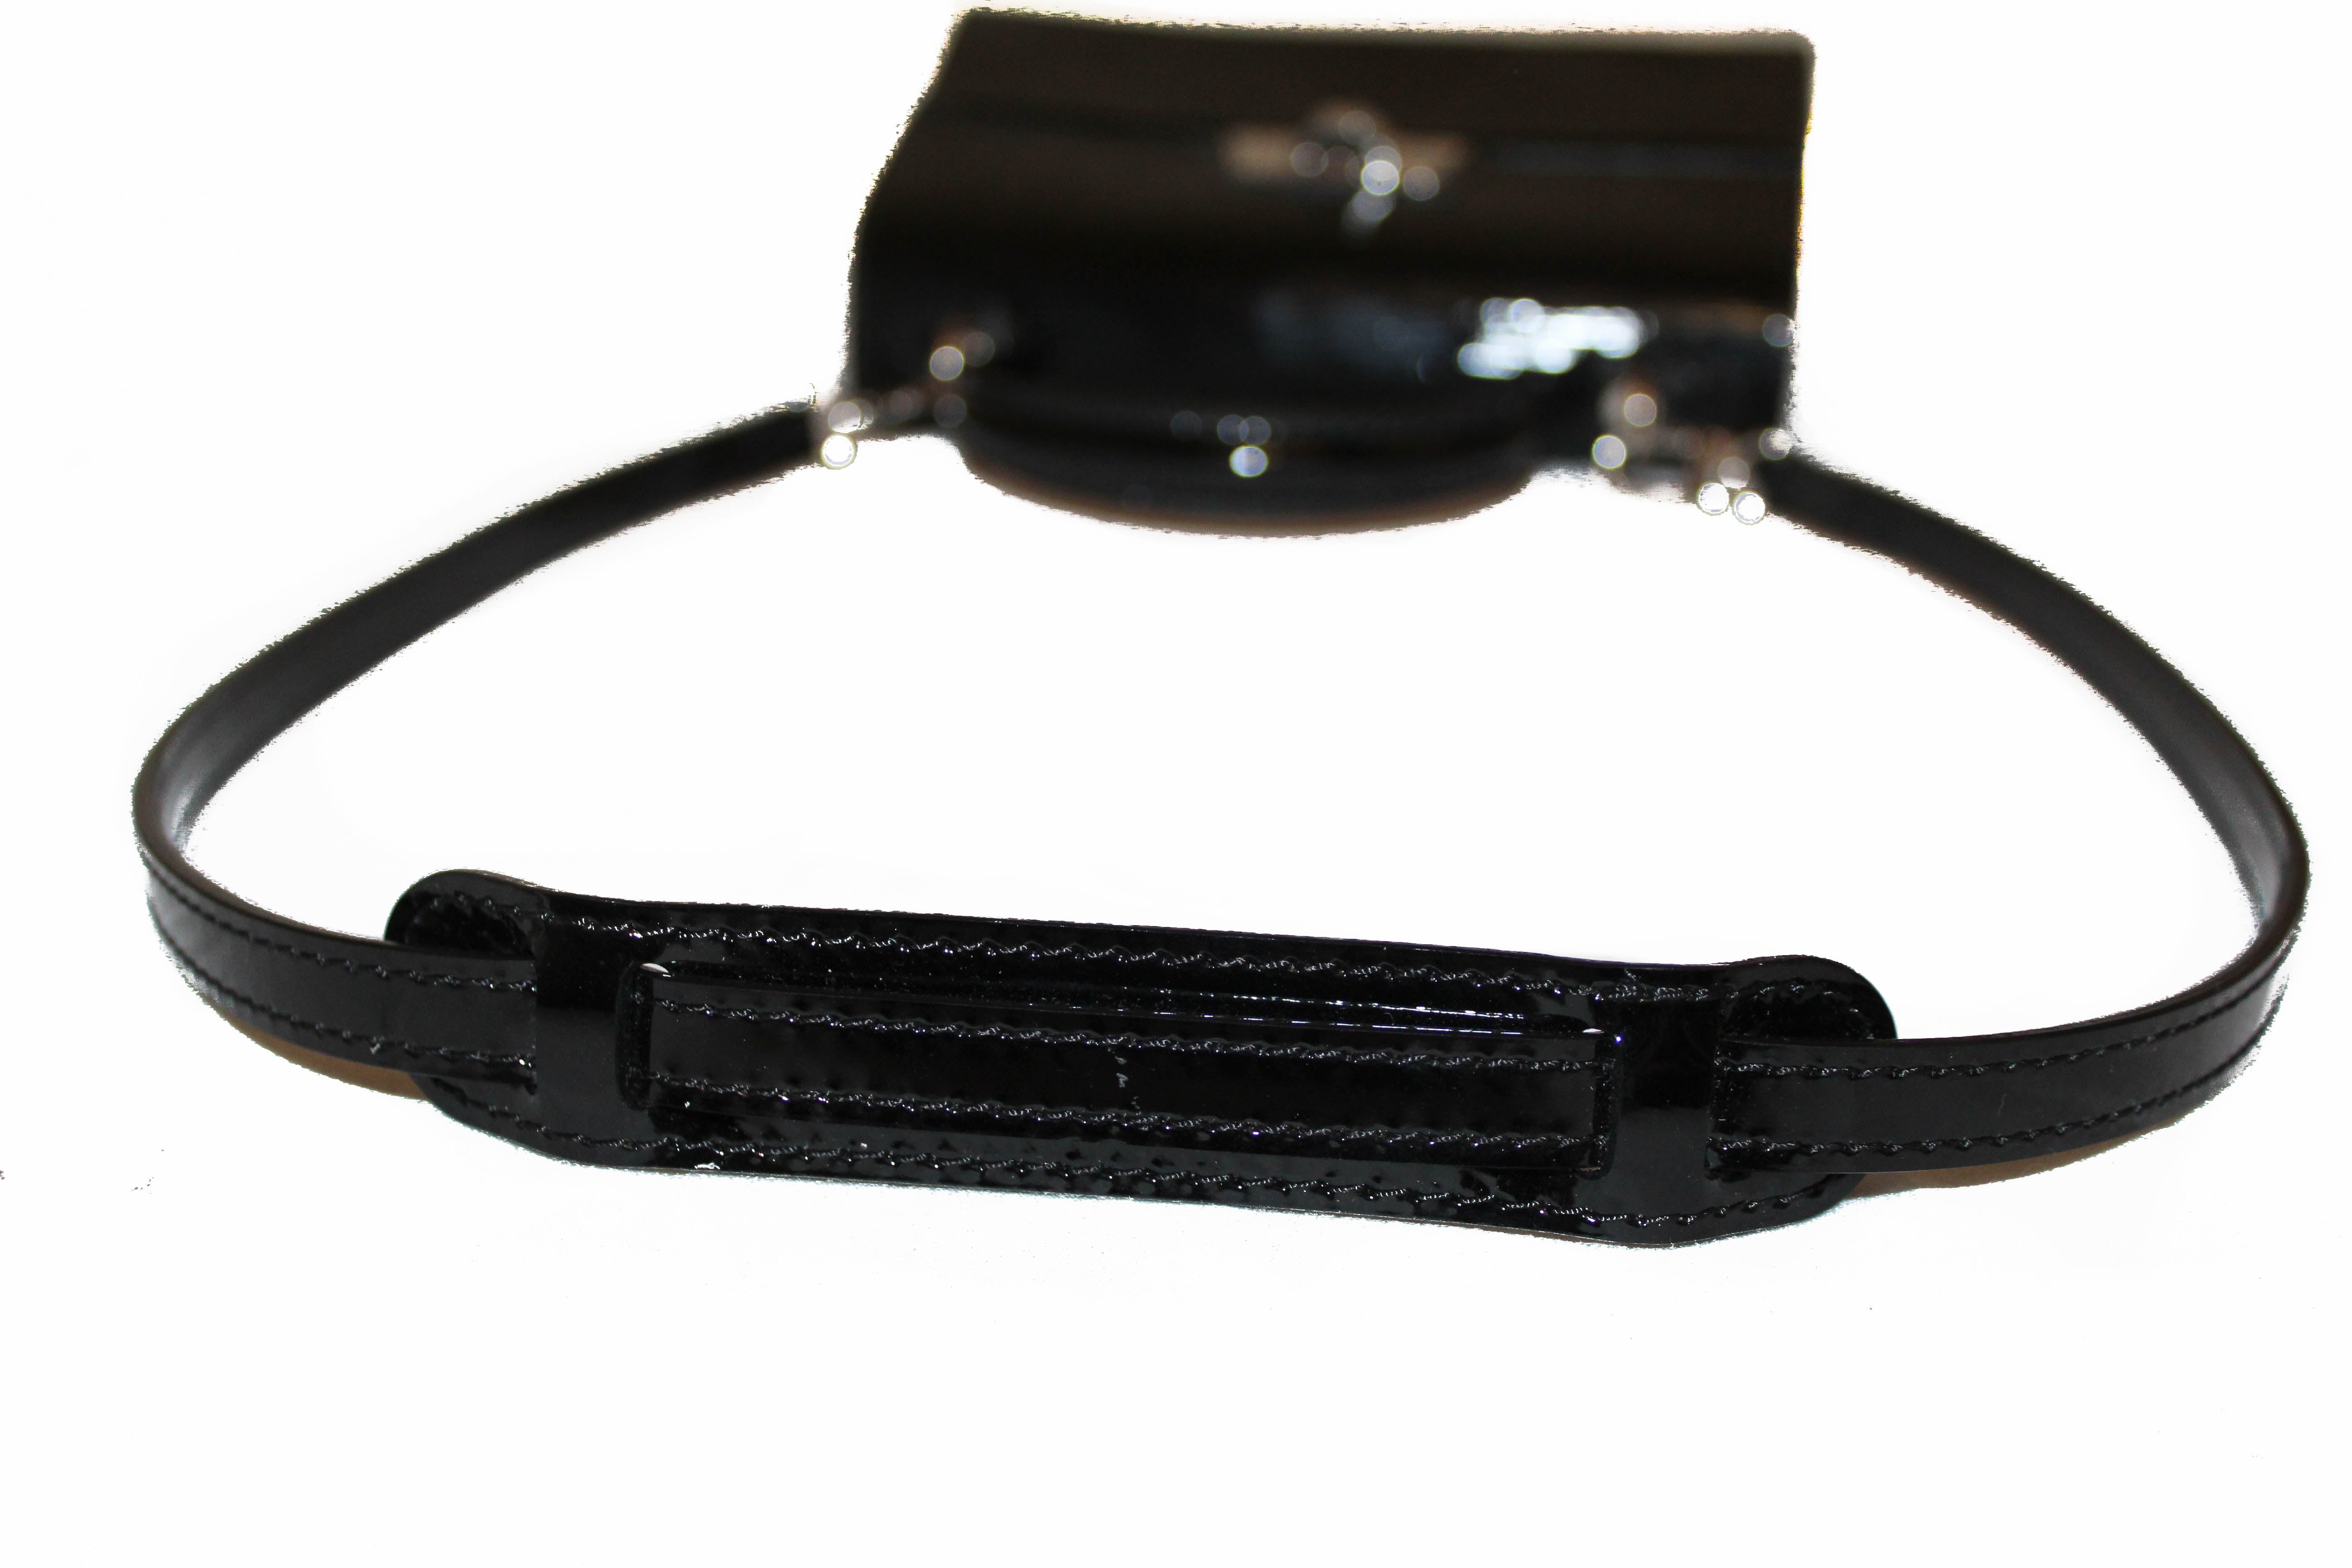 USED Louis Vuitton Black Electric Epi Leather Sevigne PM Bag AUTHENTIC